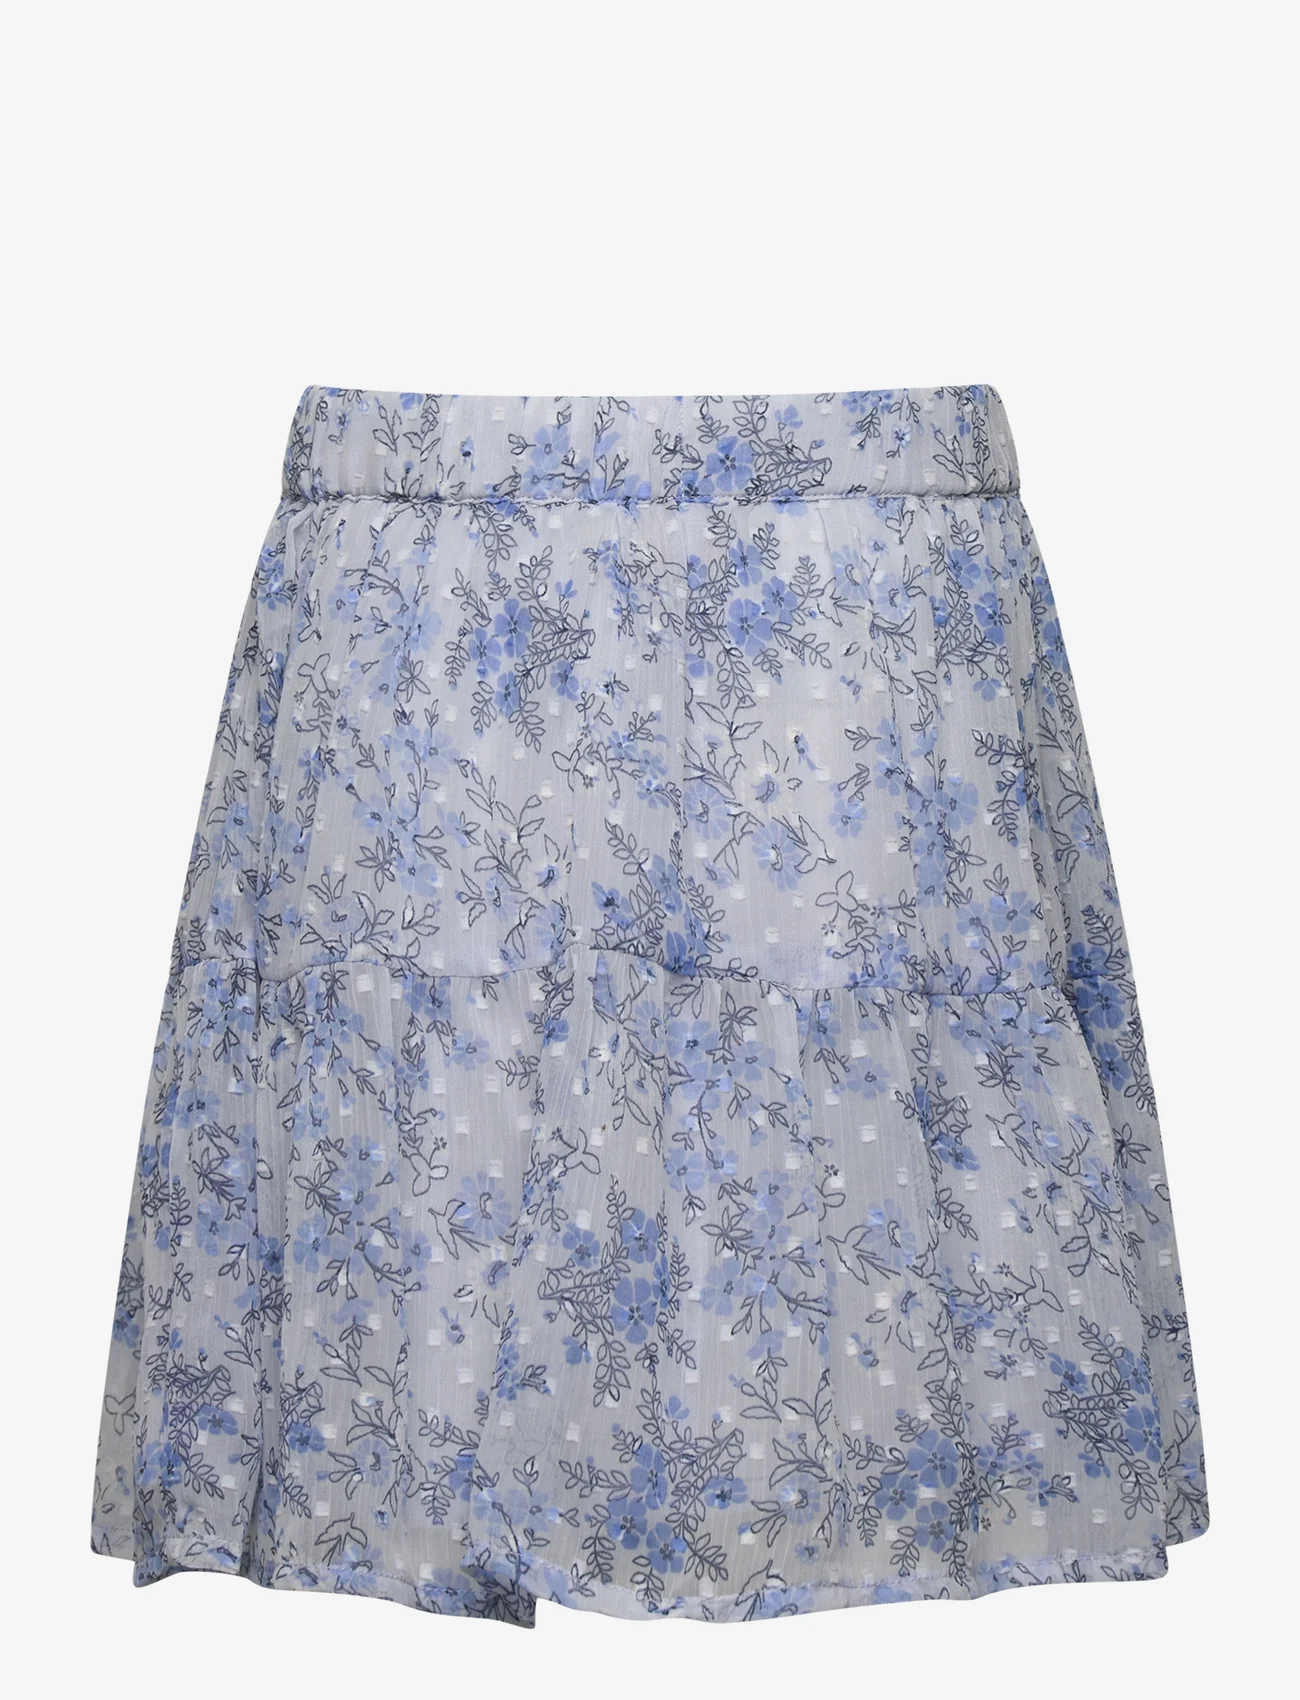 Creamie - Skirt Flower Dobby - midi skirts - xenon blue - 1